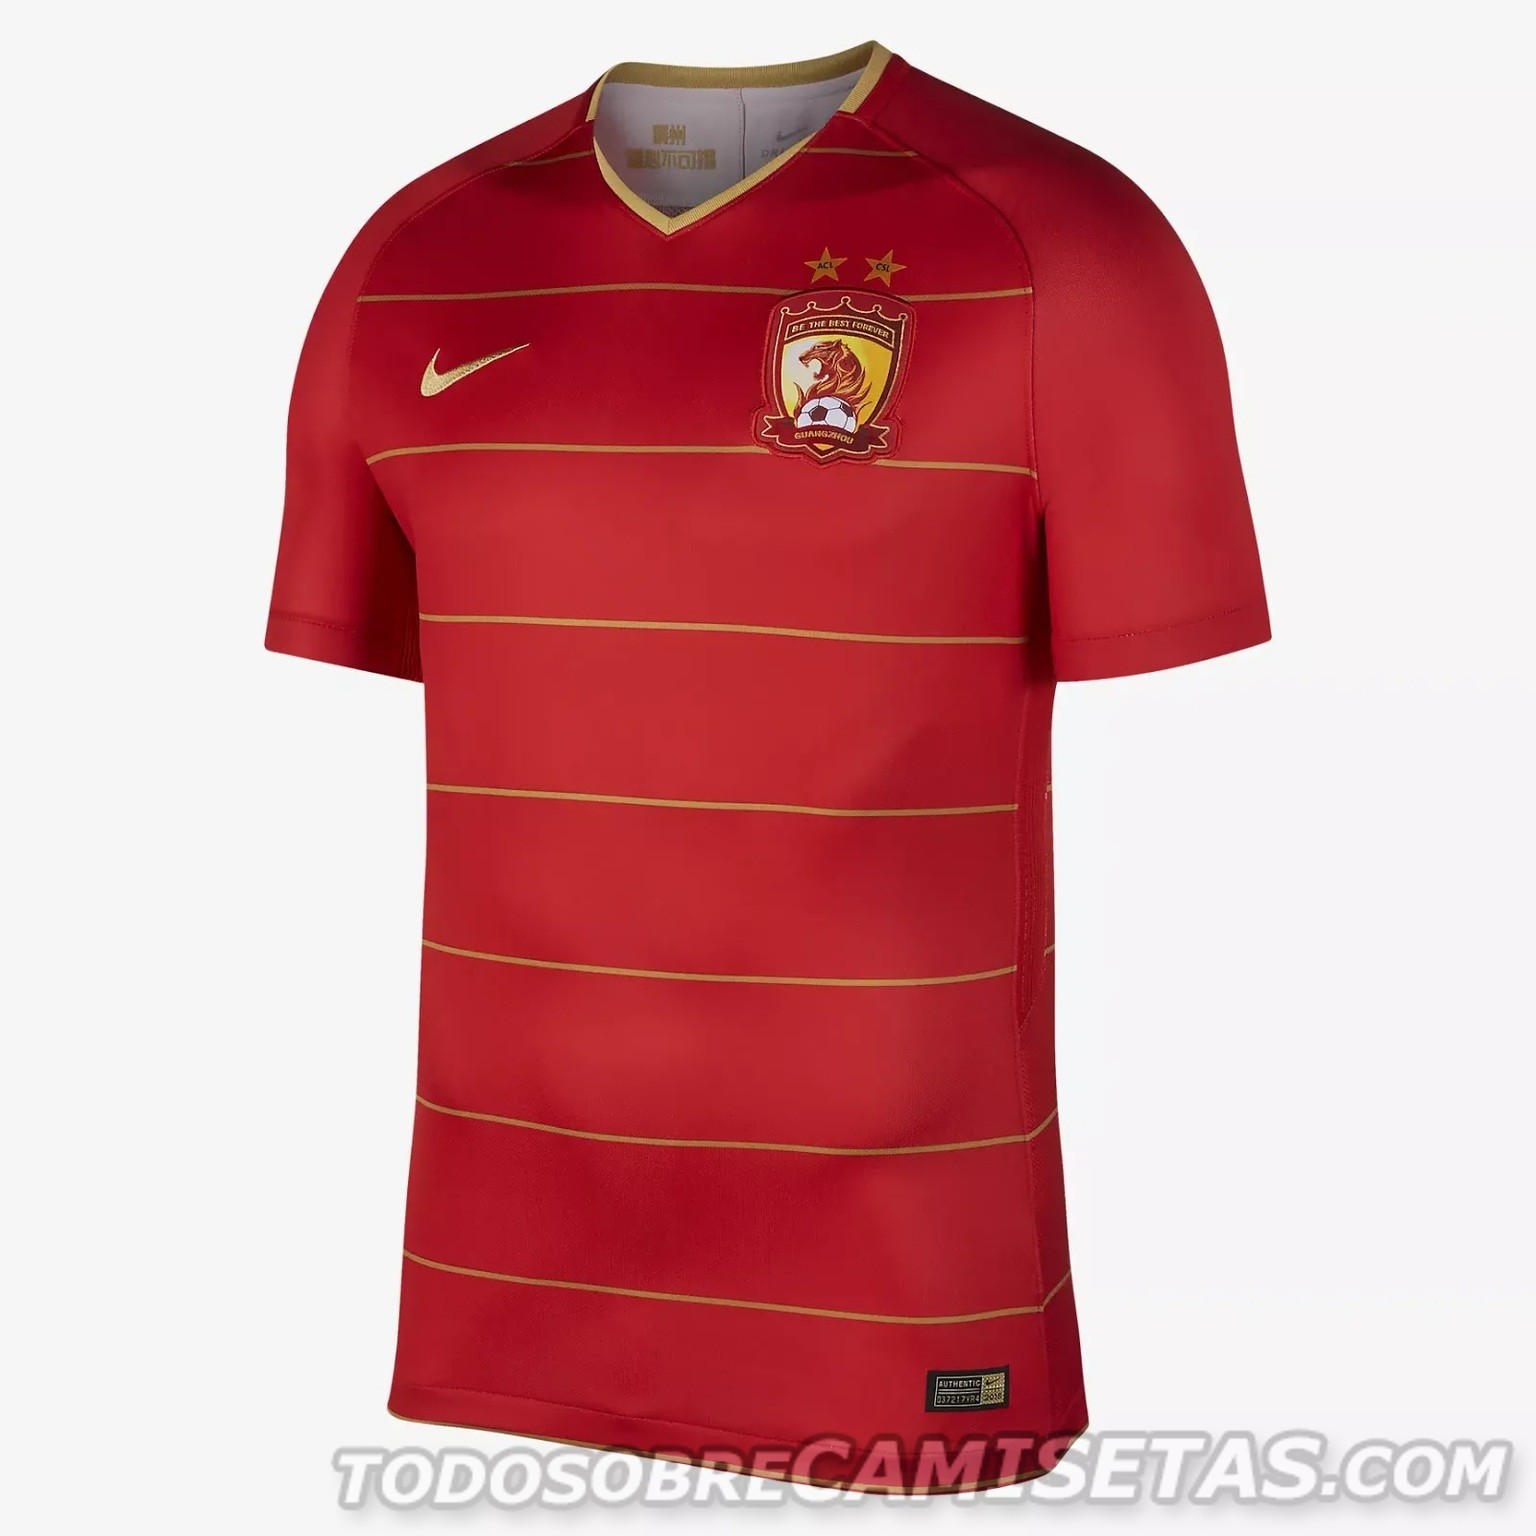 Guangzhou Evergrande 2018 Nike Home Kit